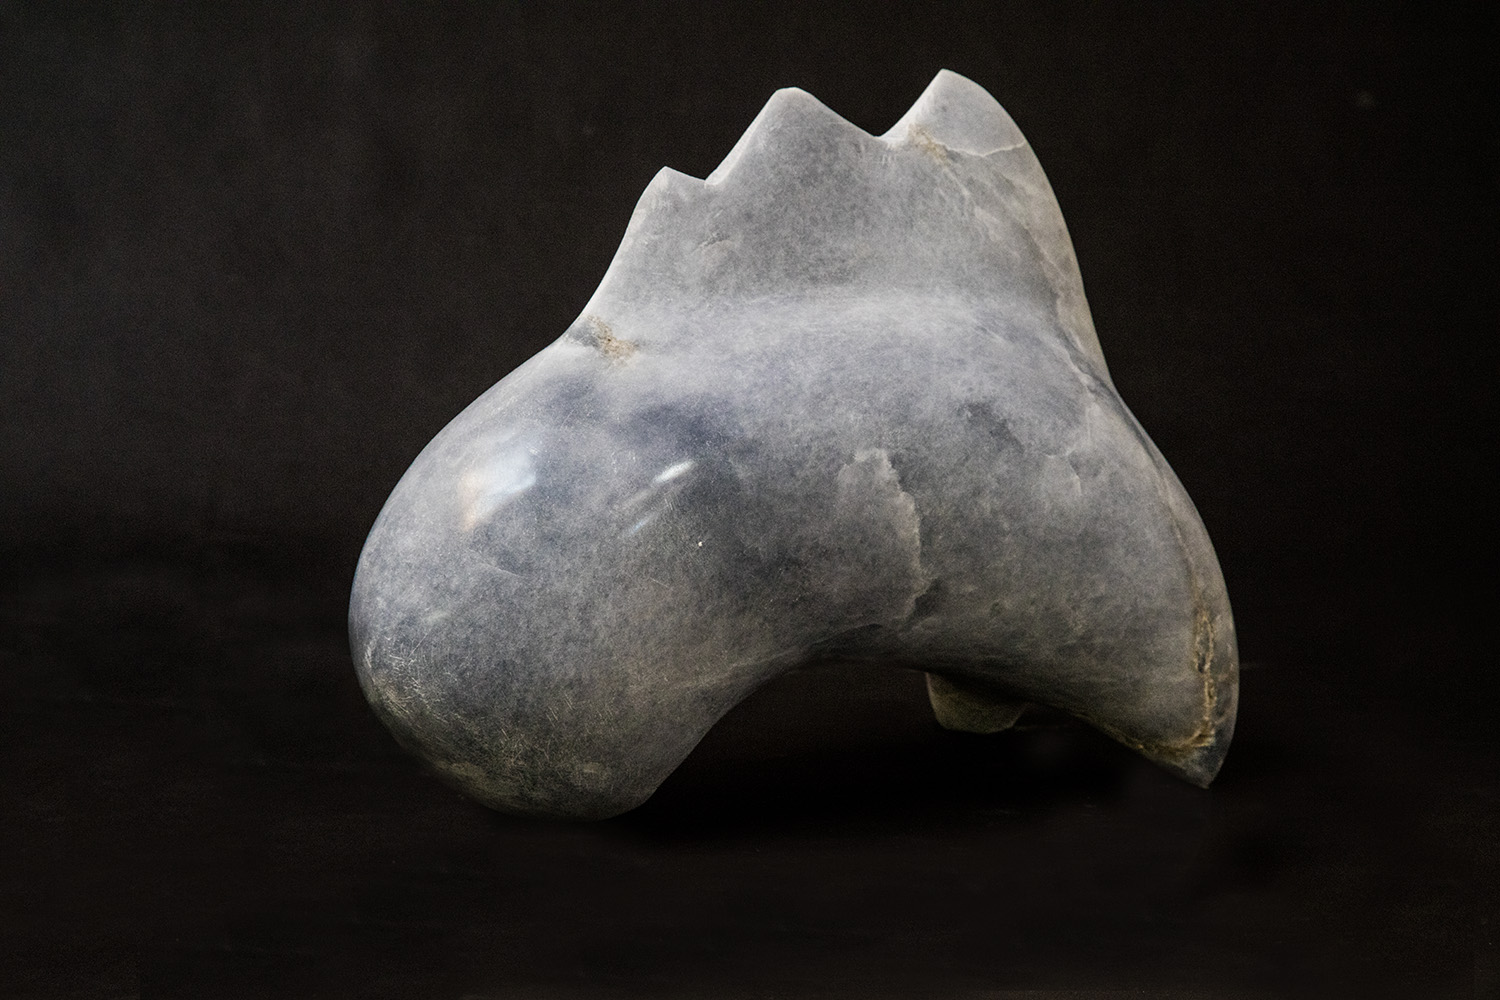 Horney (Front), alabaster, 11.5" x 14.5" x 5.5", 2015